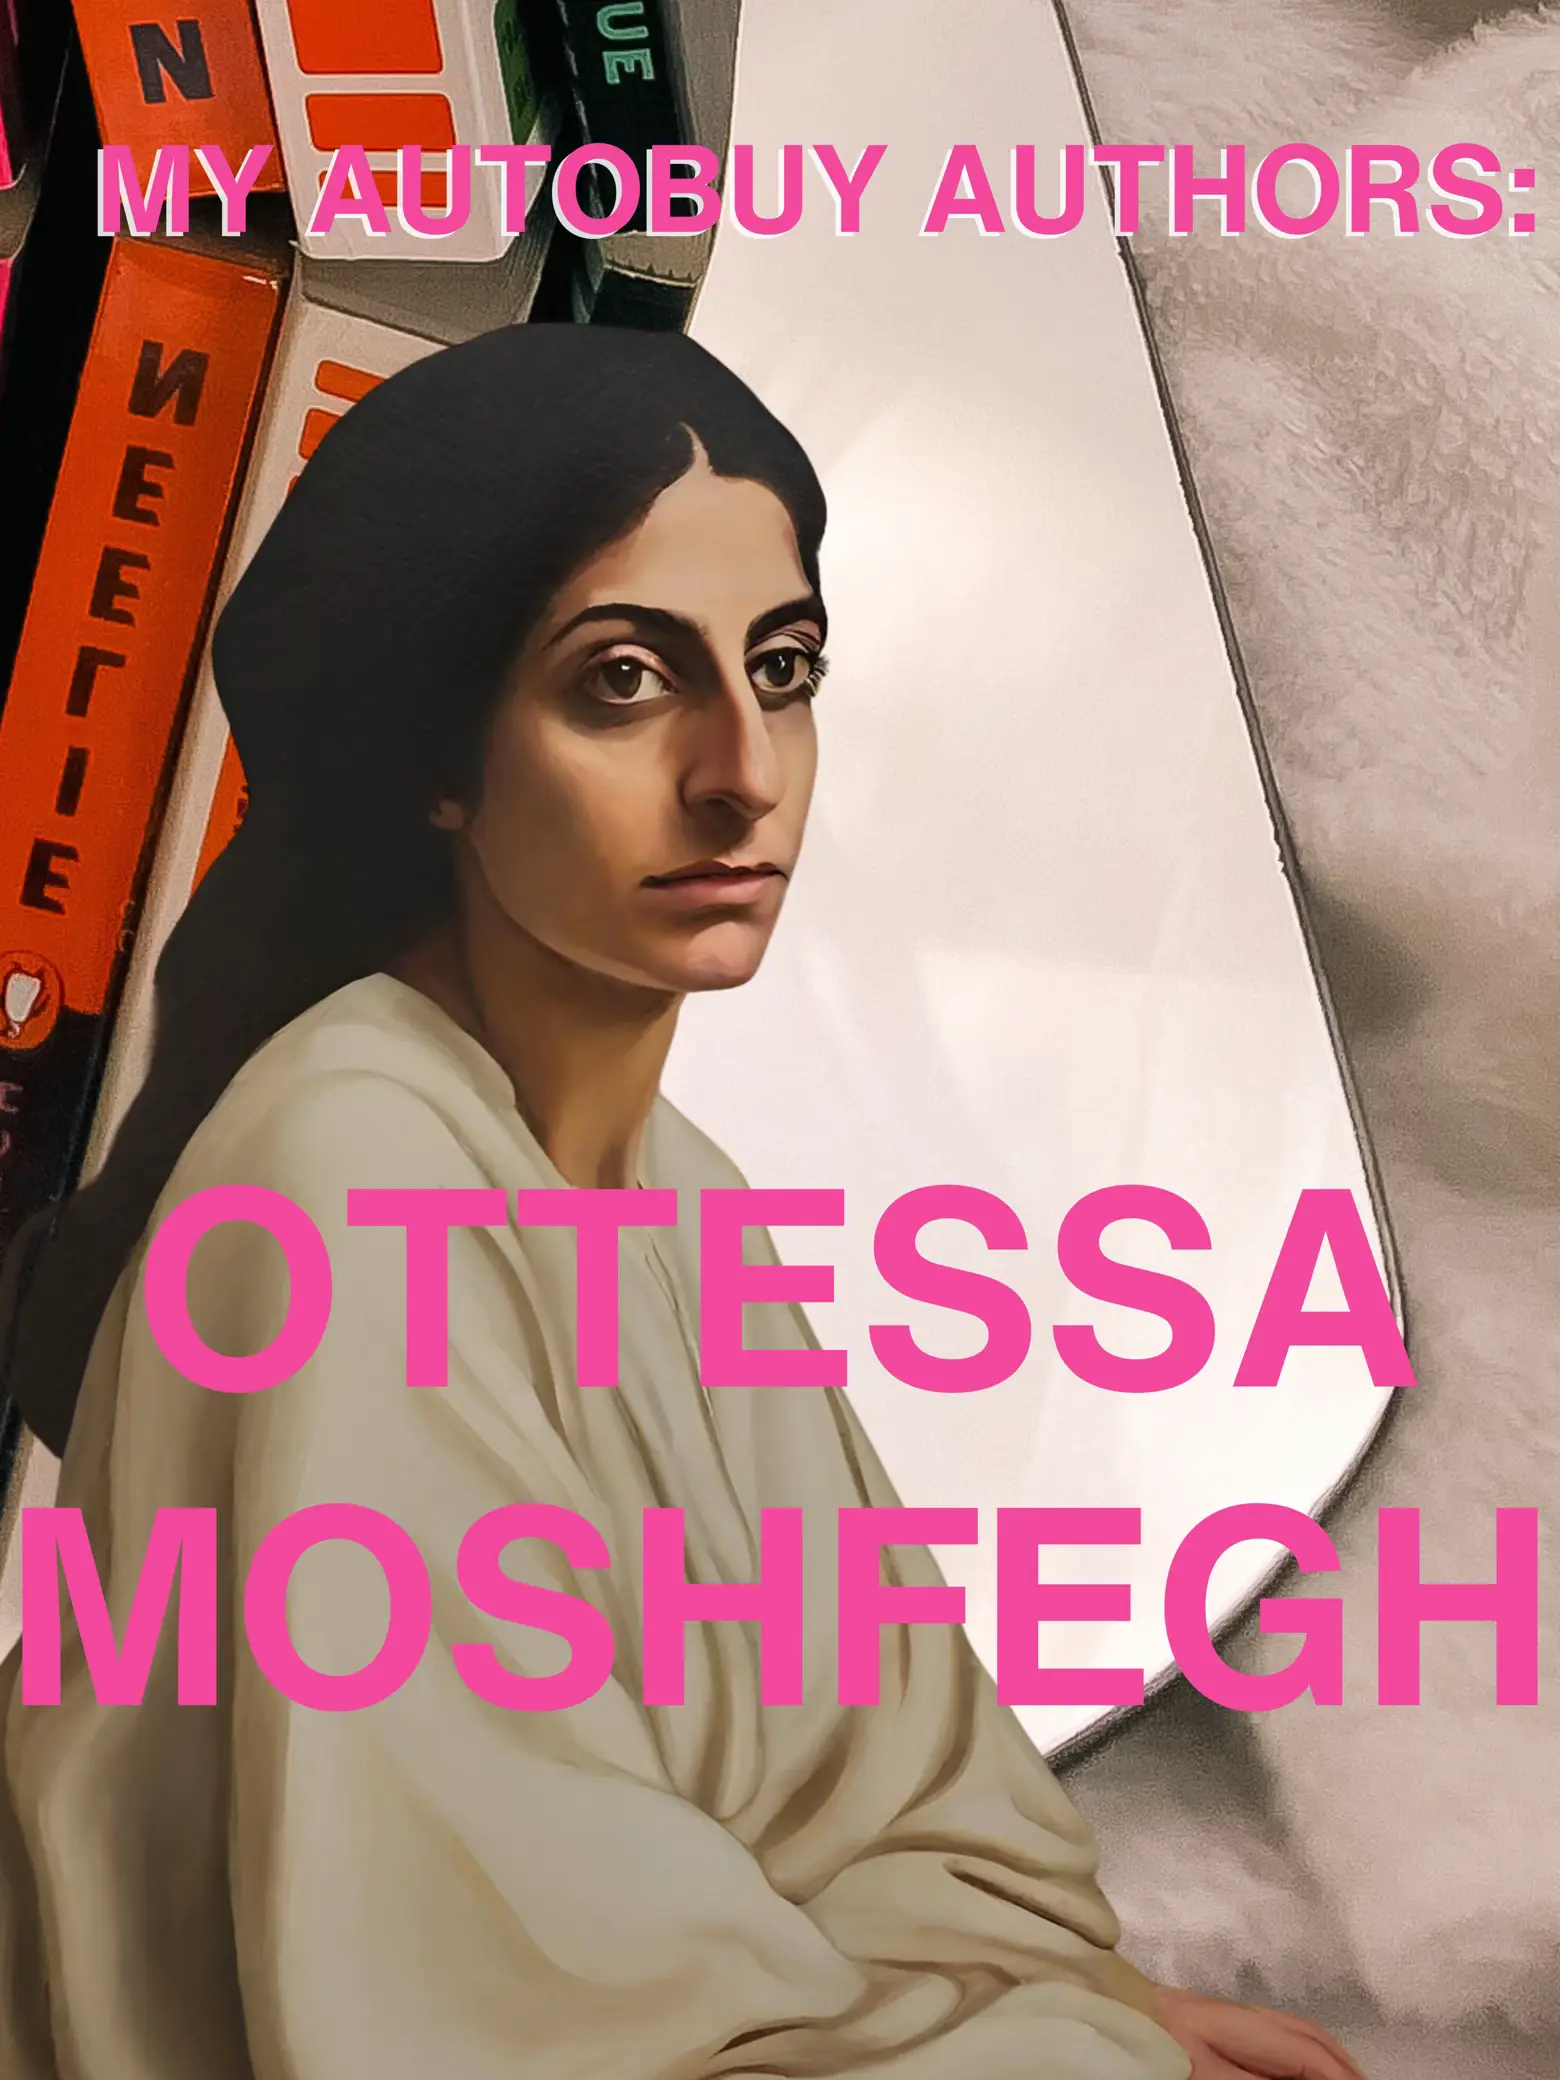 Dita Von Tessa - Lemon8 Search